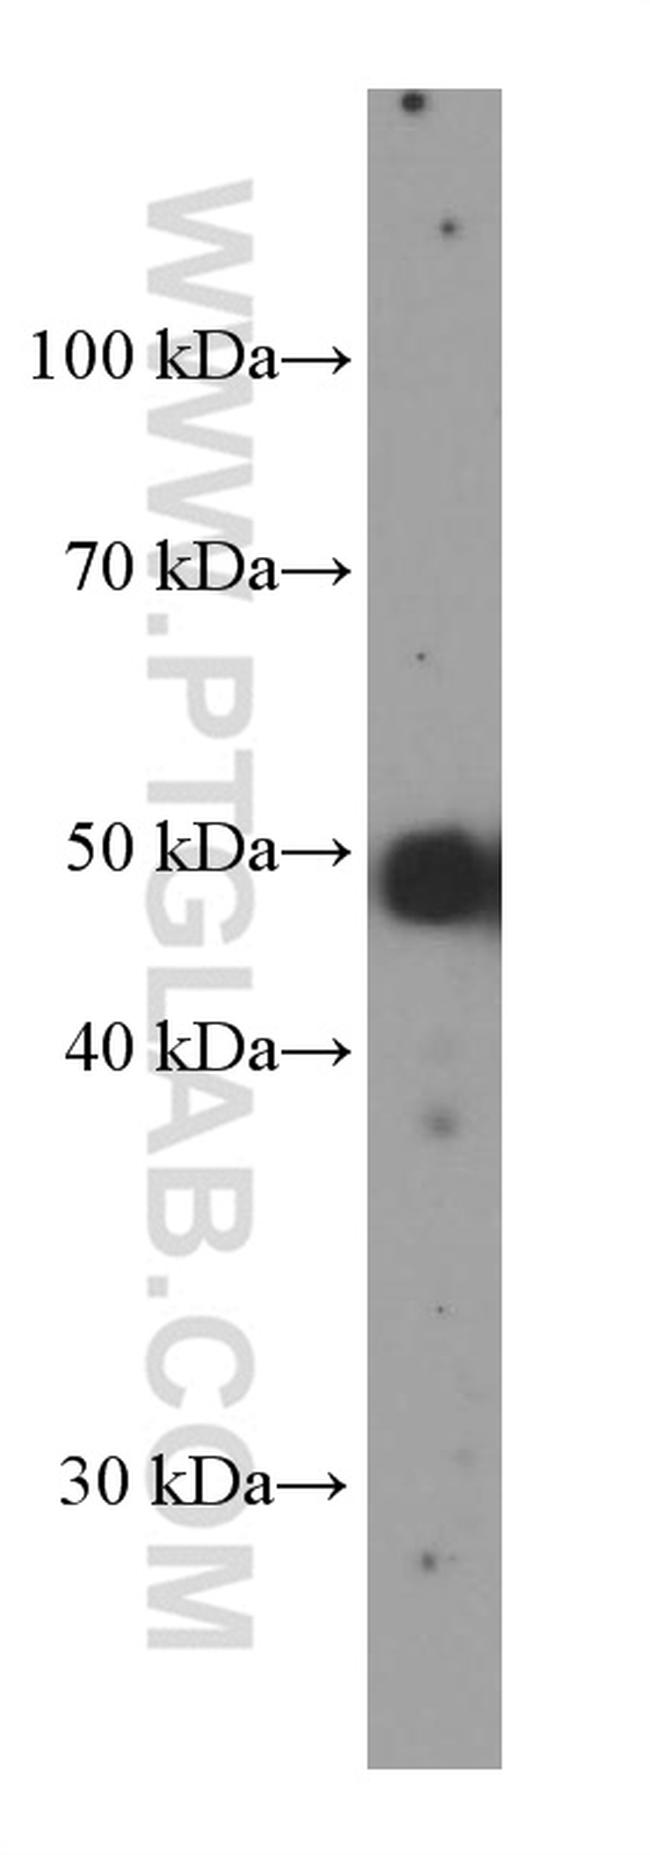 PAX8 Antibody in Western Blot (WB)